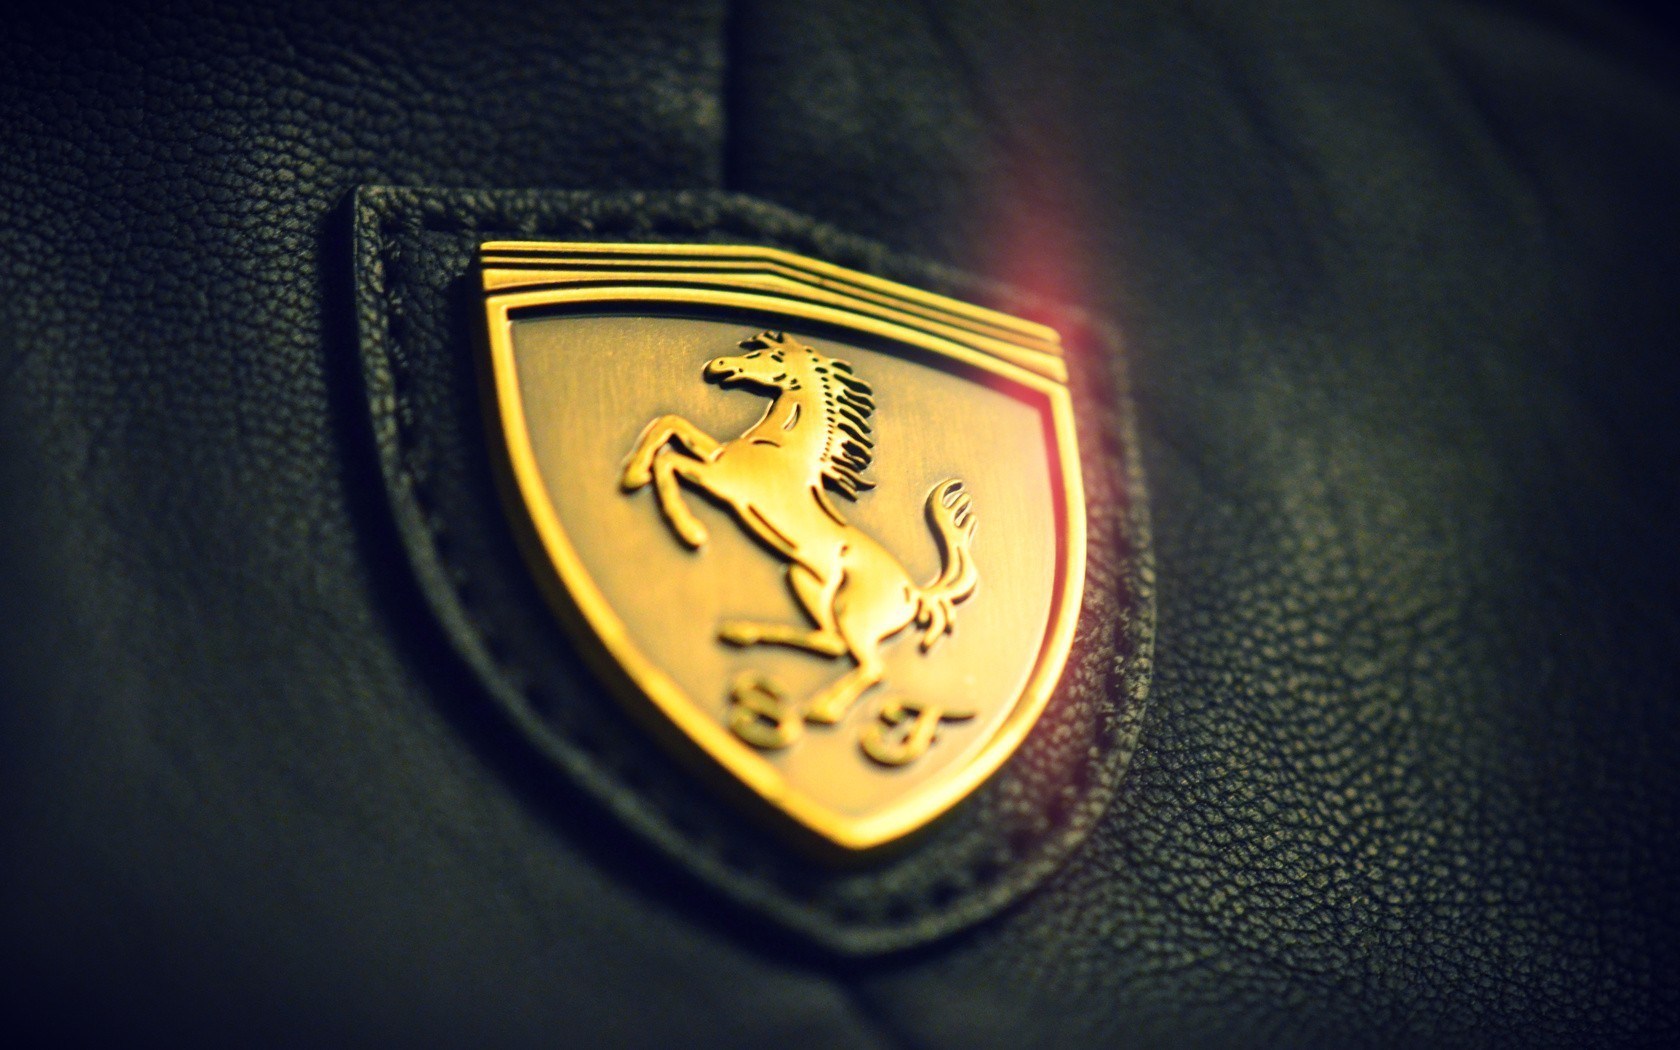 Wallpapers Logo Ferrari Hd | High Definitions Wallpapers